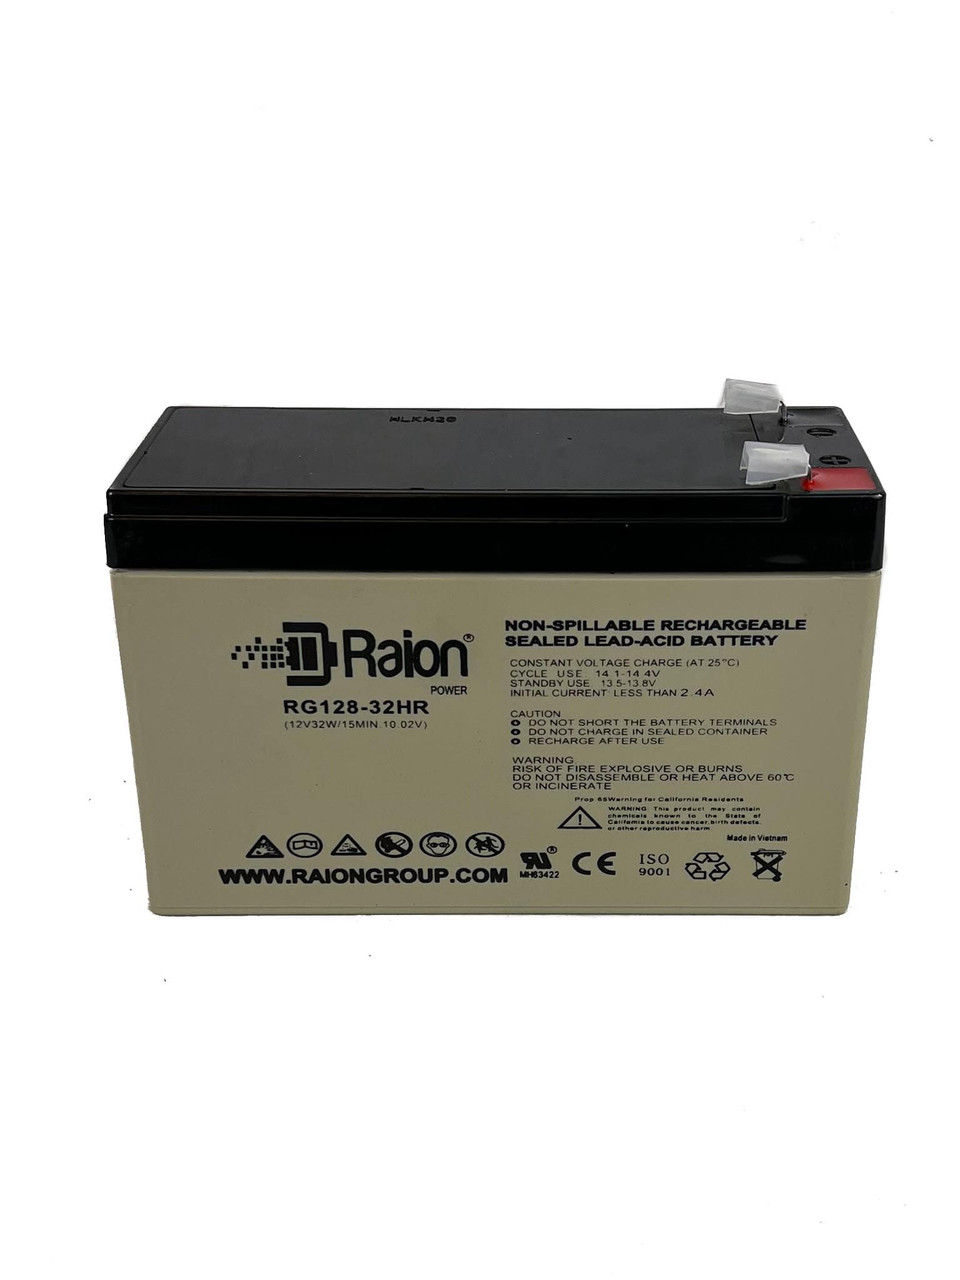 Raion Power RG128-32HR Replacement High Rate Battery Cartridge for Tripp Lite OmniVS 450VA OMNIVSX450